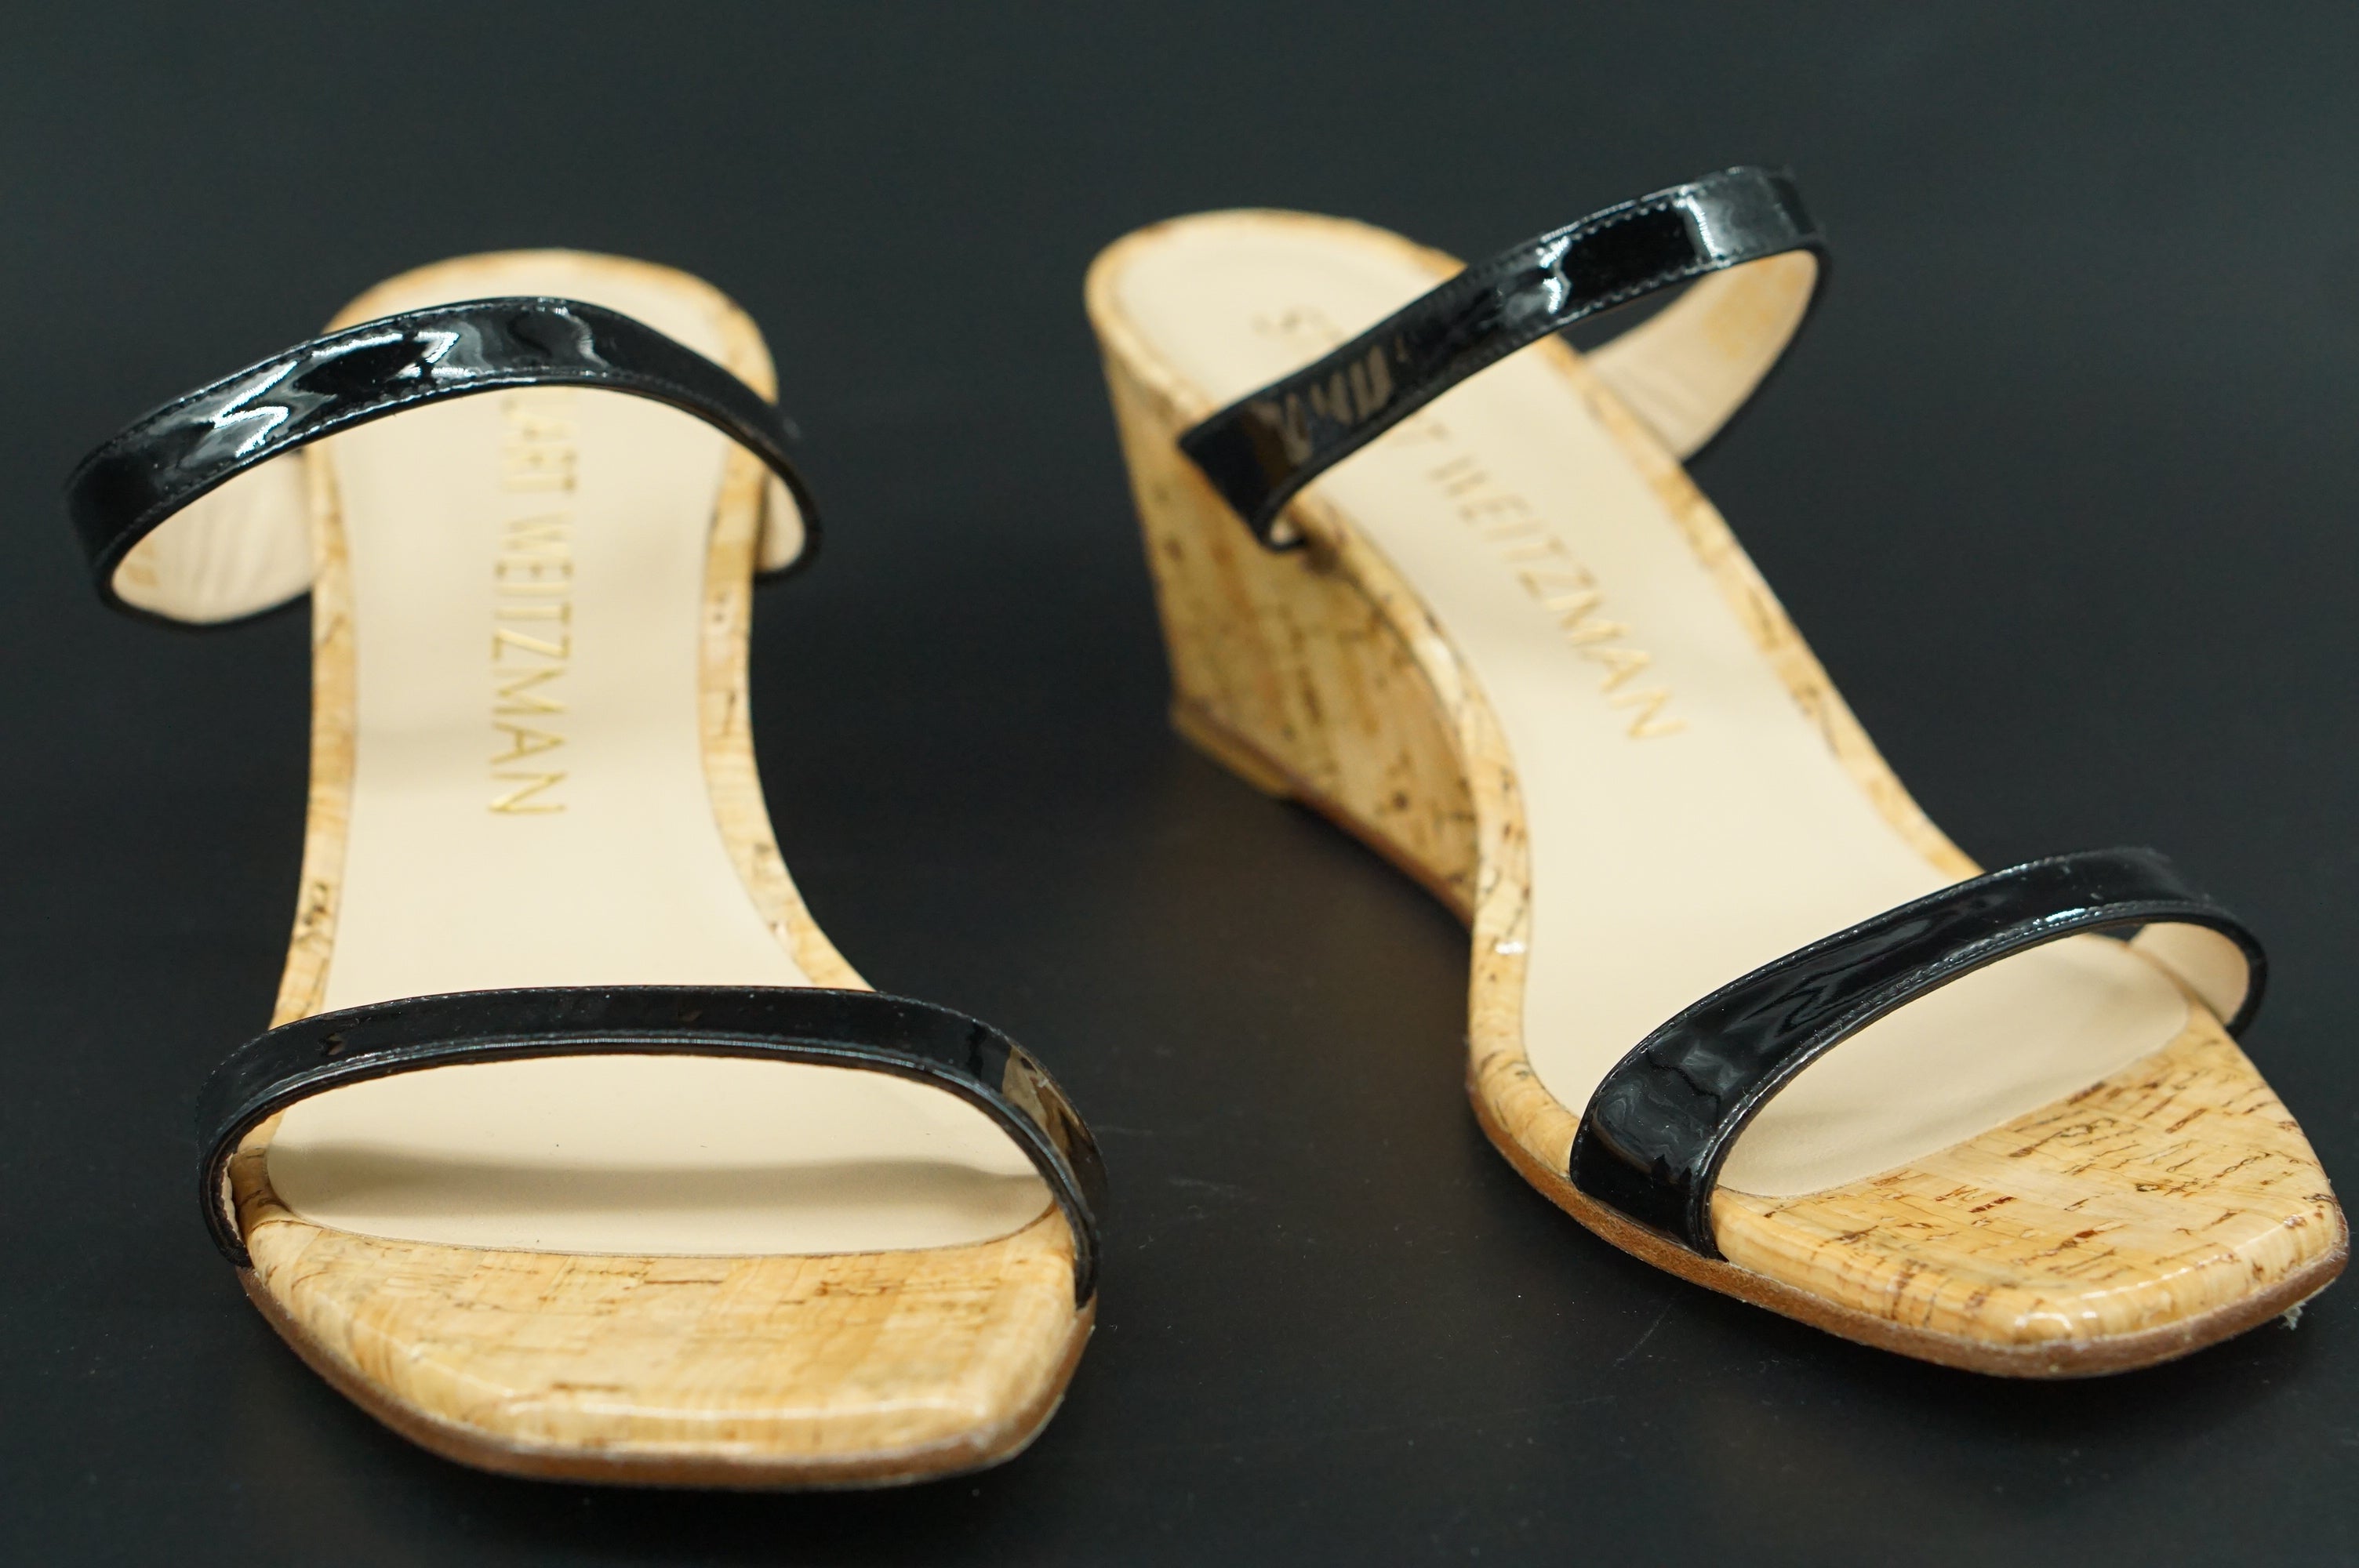 Stuart Weitzman Aleena Patent Leather & Cork Wedge Mules Sandals SZ 8.5 New